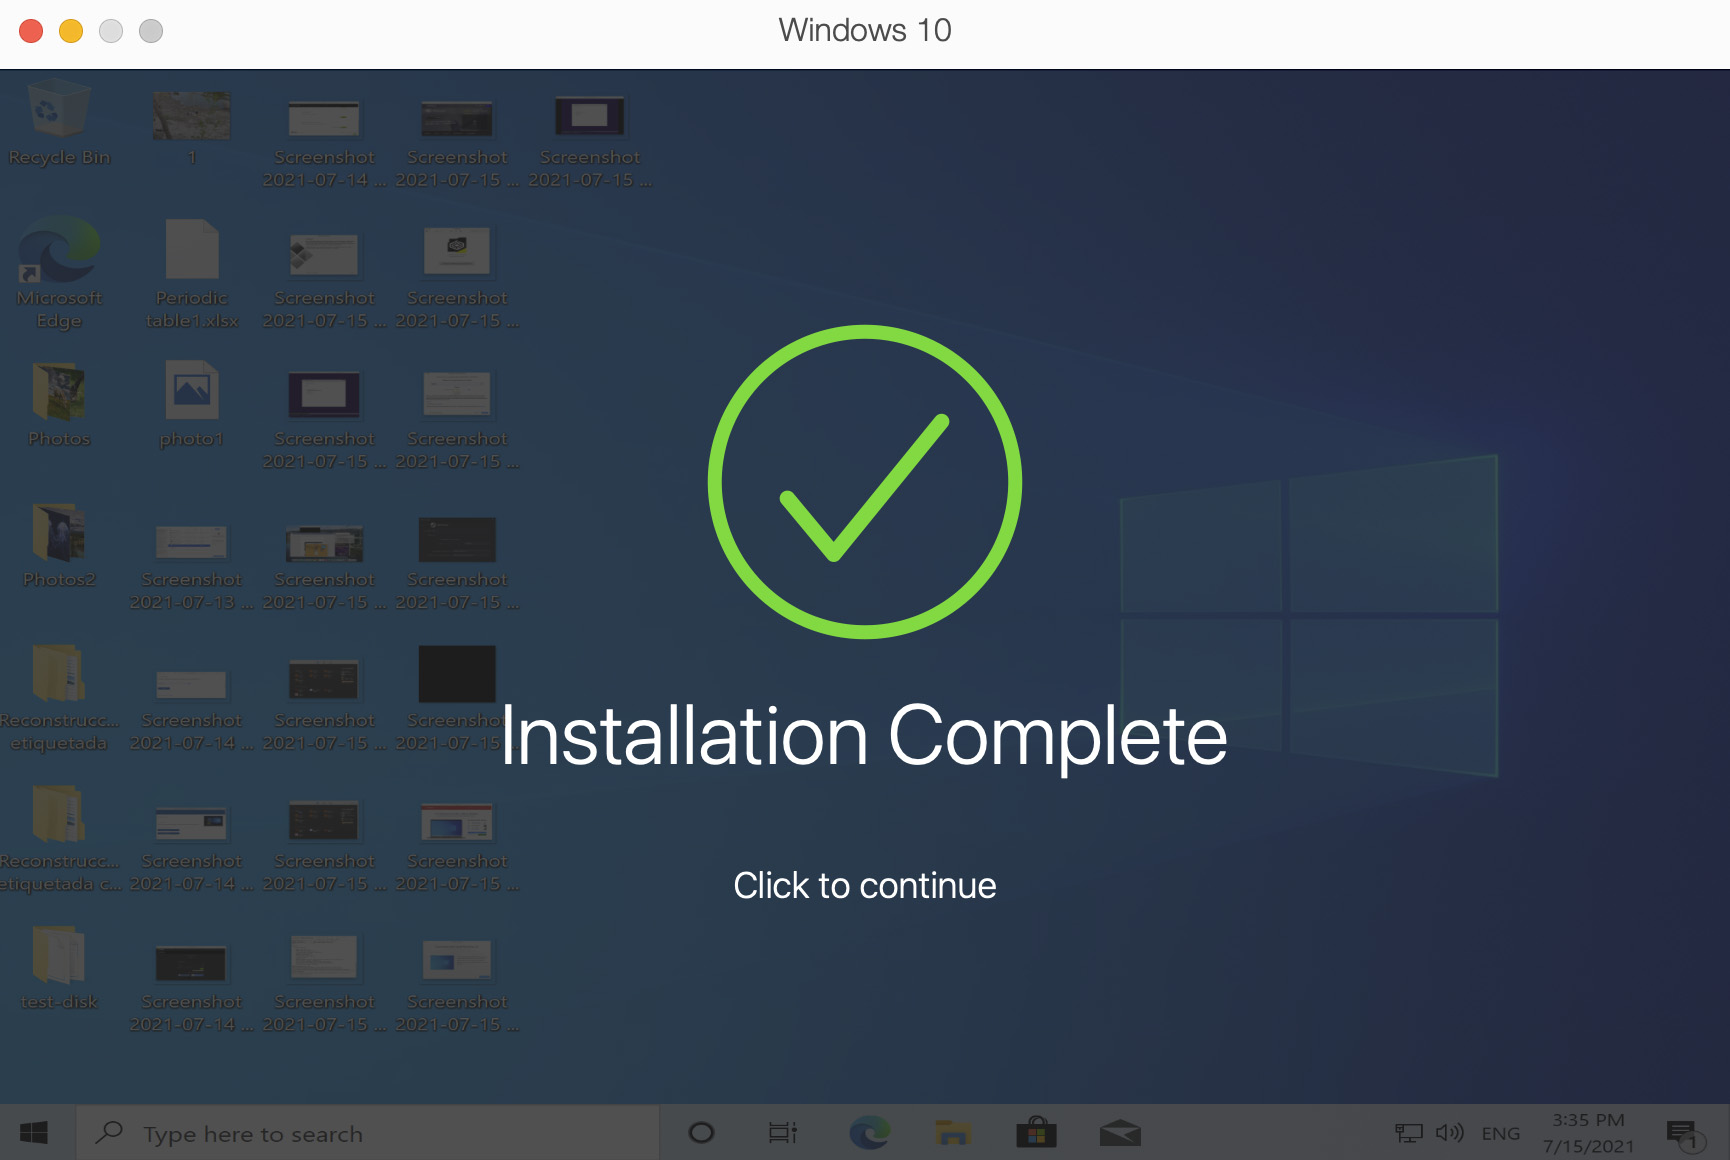 Finish installation of Windows 10